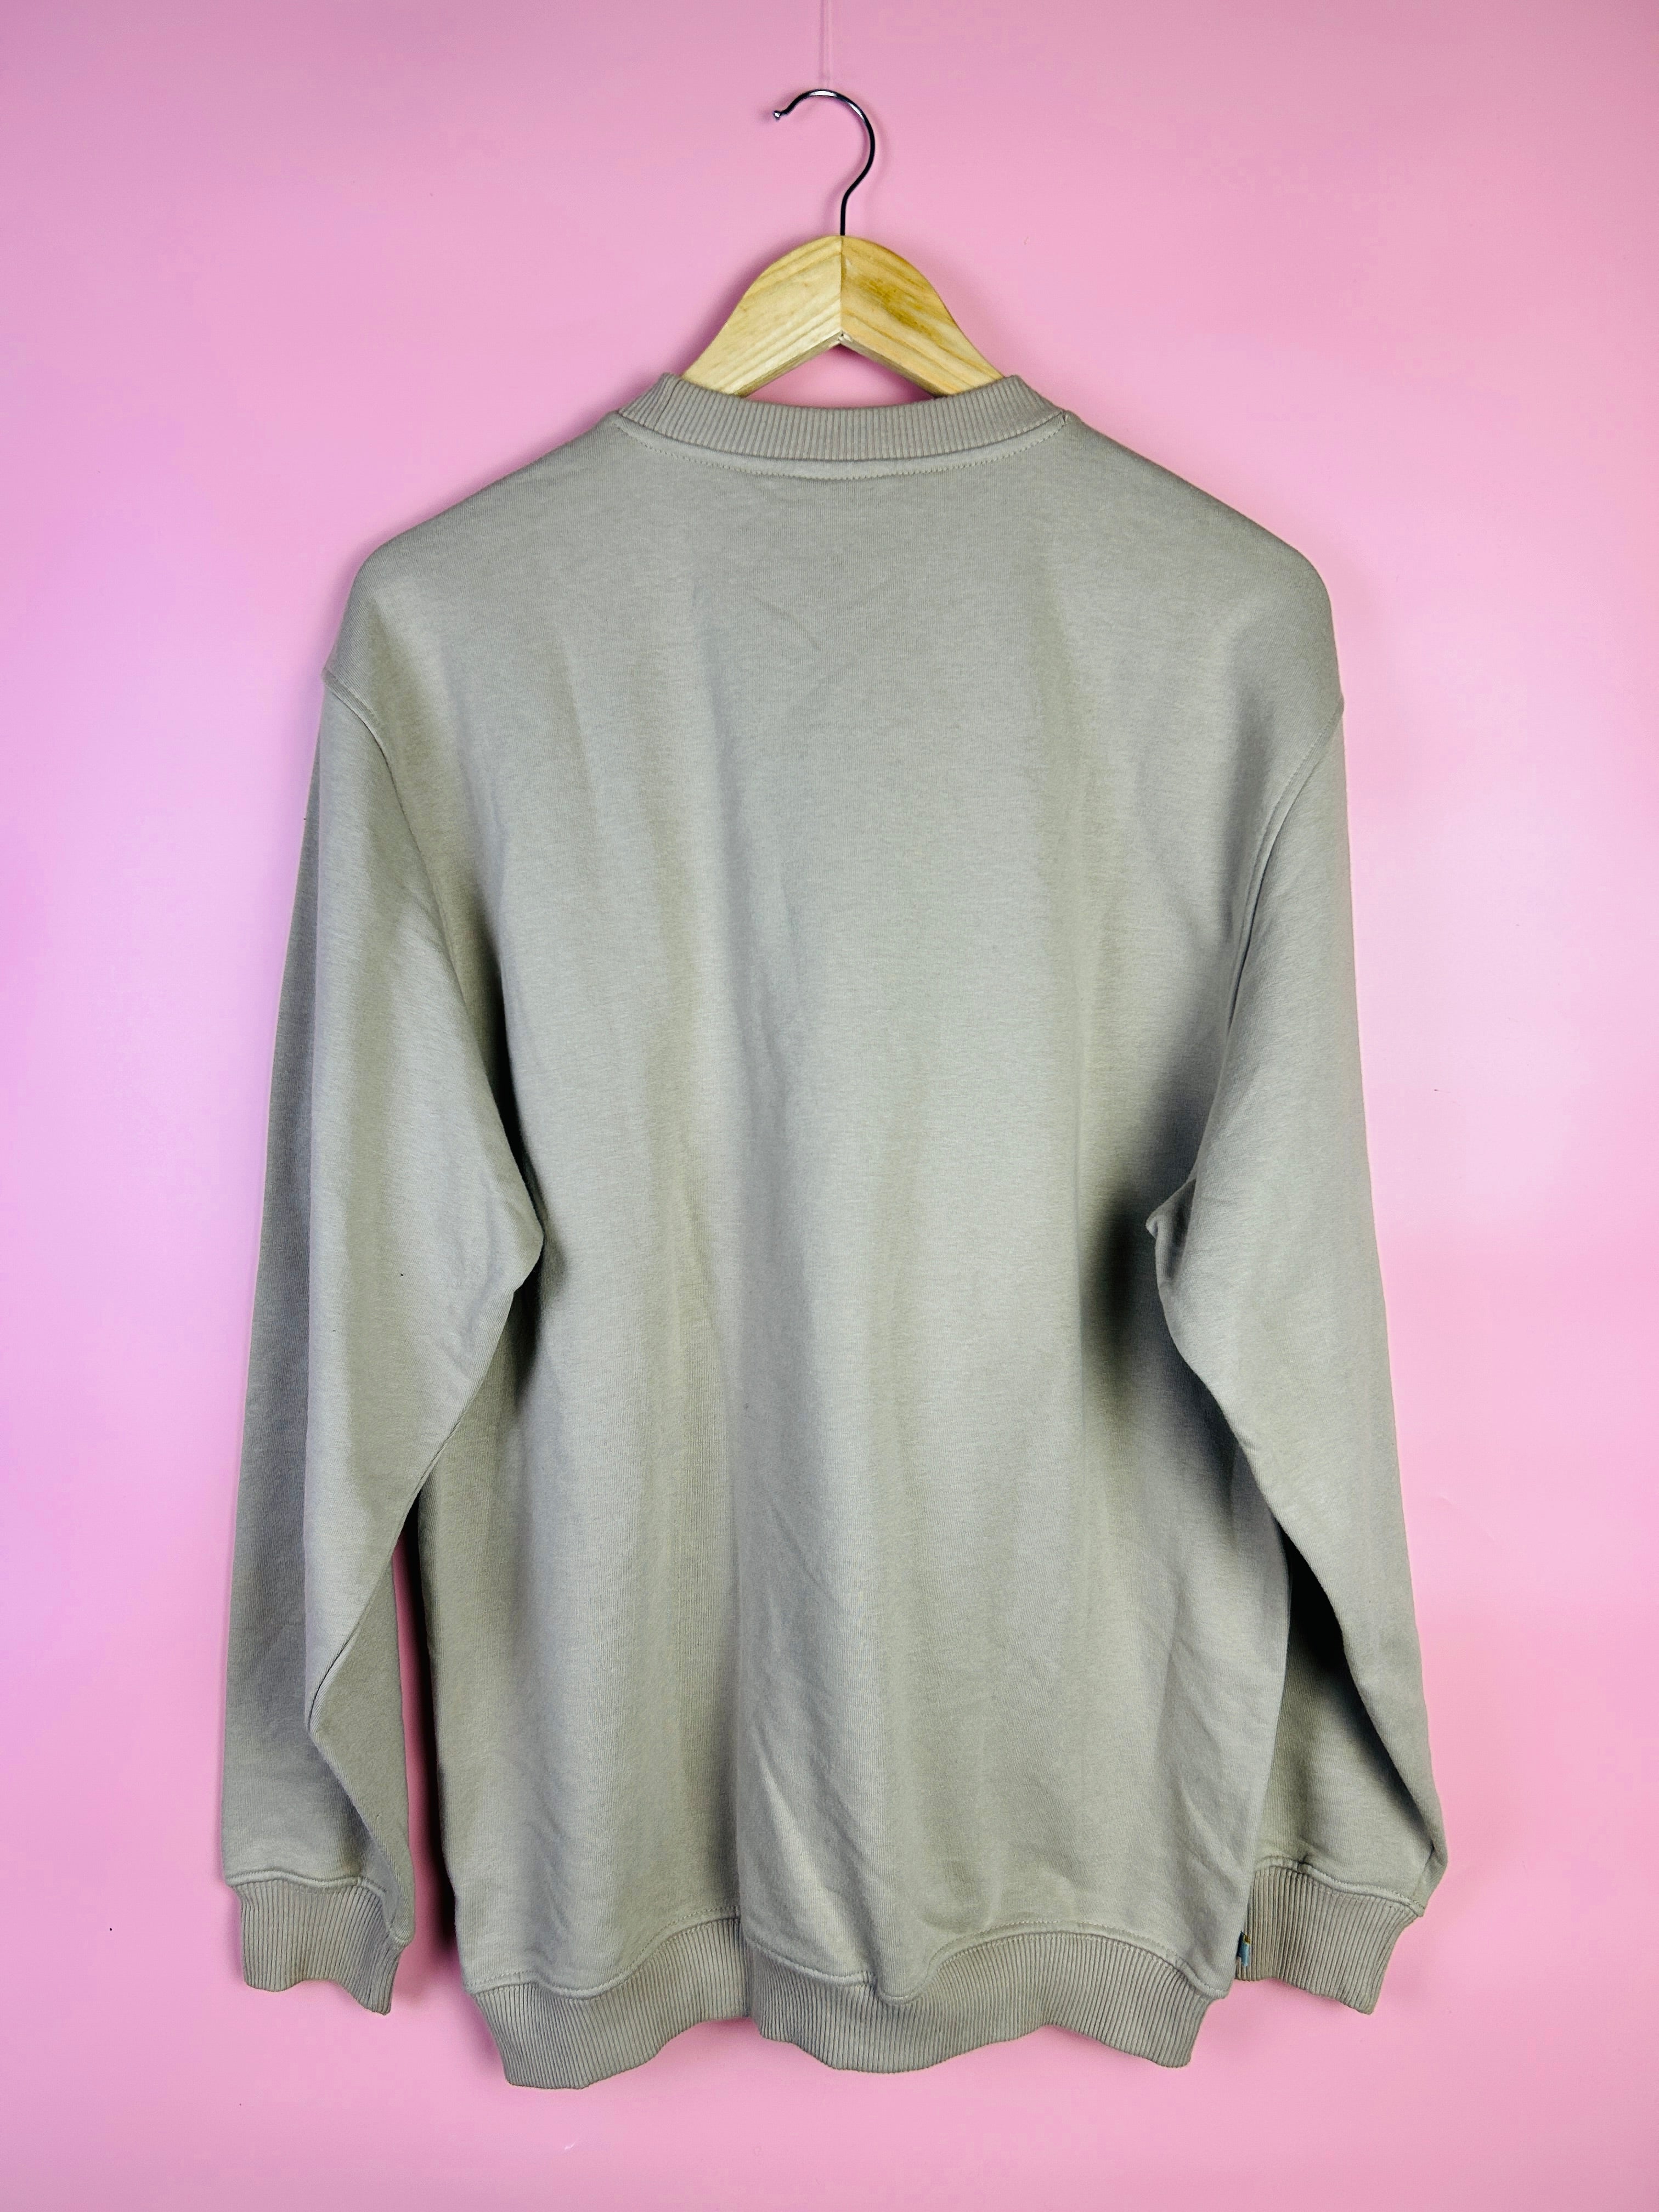 M-L Vintage Reebok Sweater